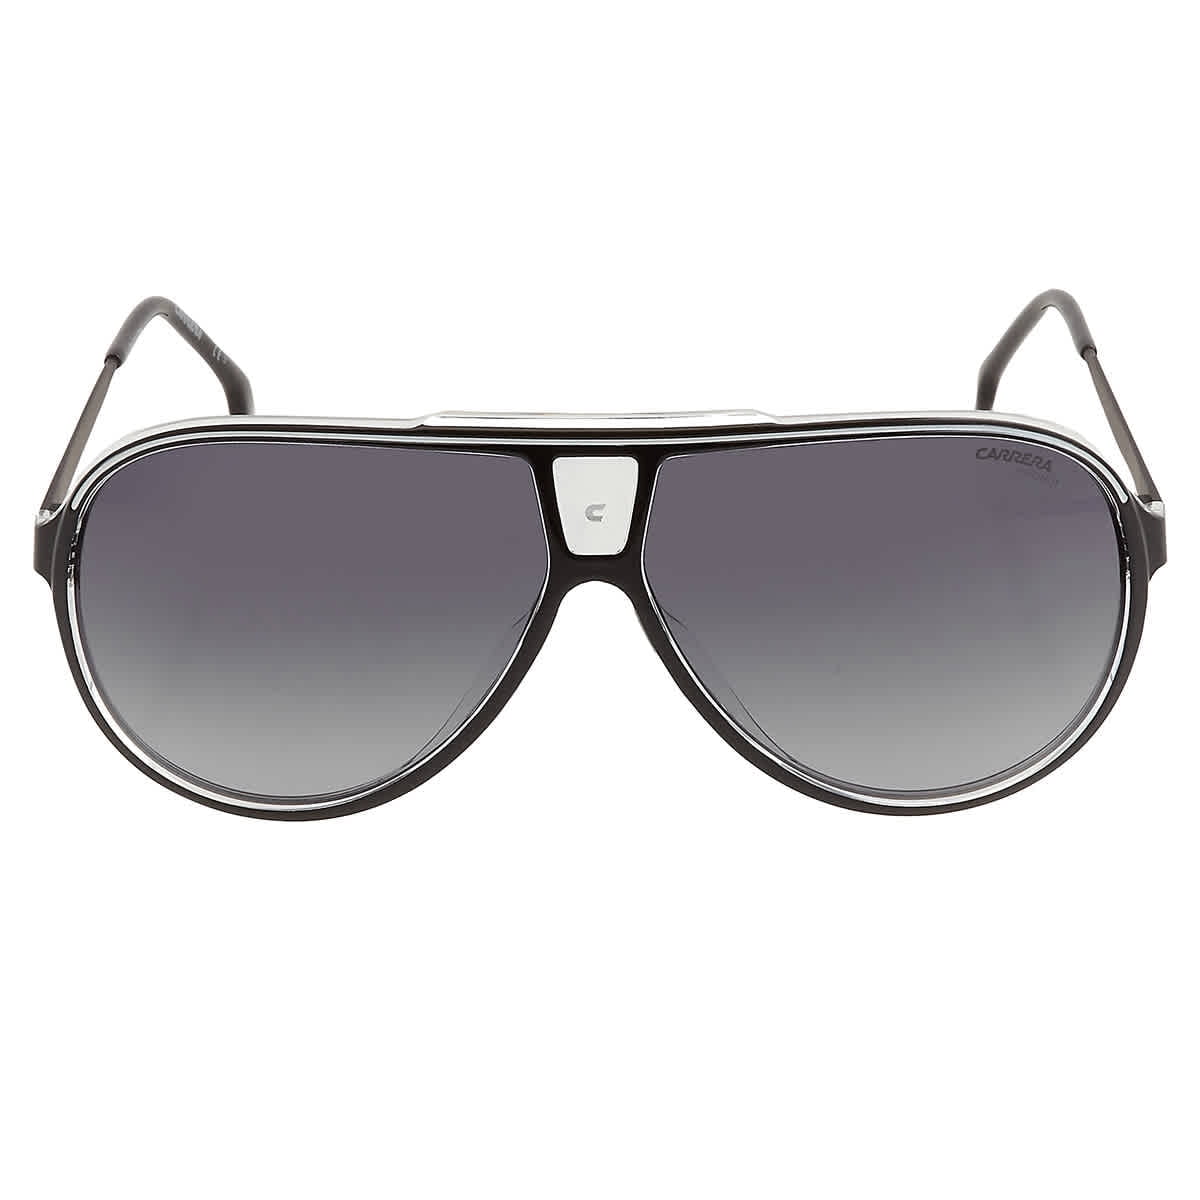 Carrera Grey Shaded Pilot Men's Sunglasses CARRERA 1050/S 080S/9O 63